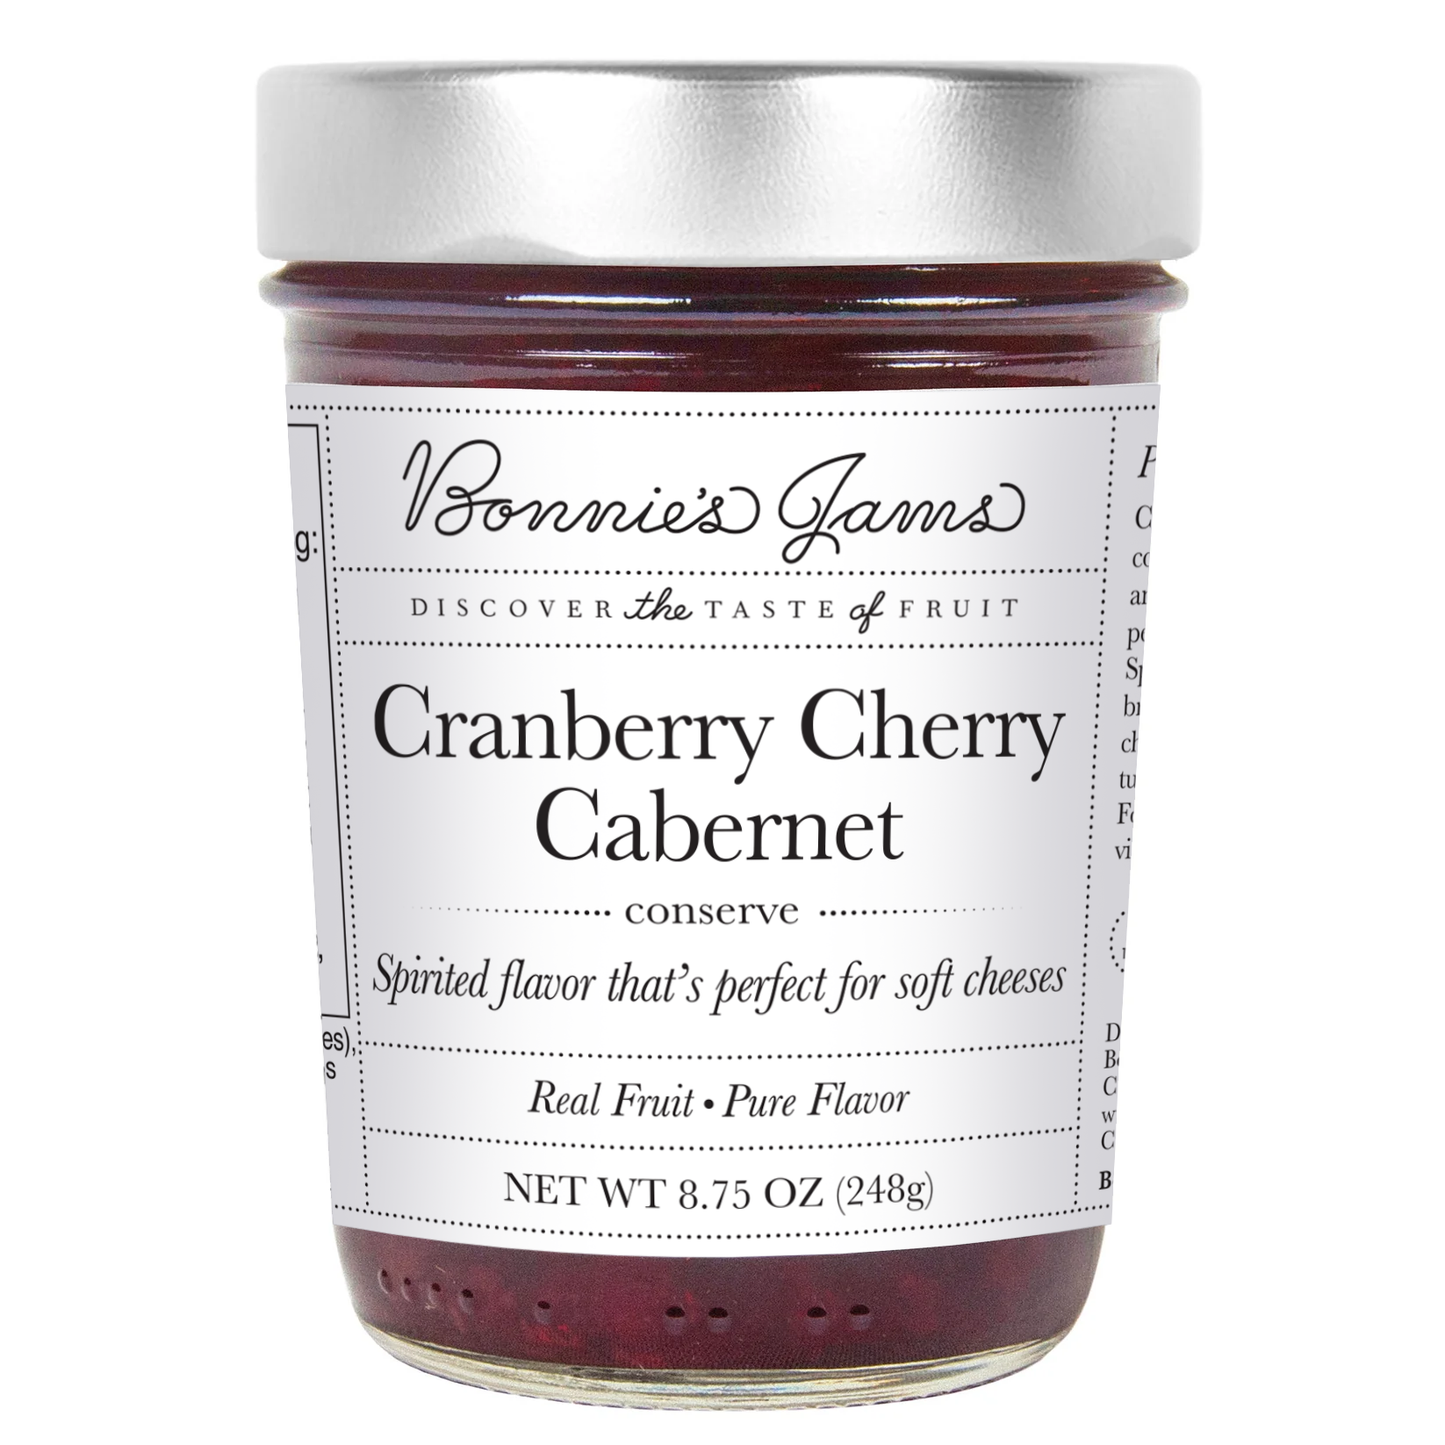 Cranberry Cherry Cabernet